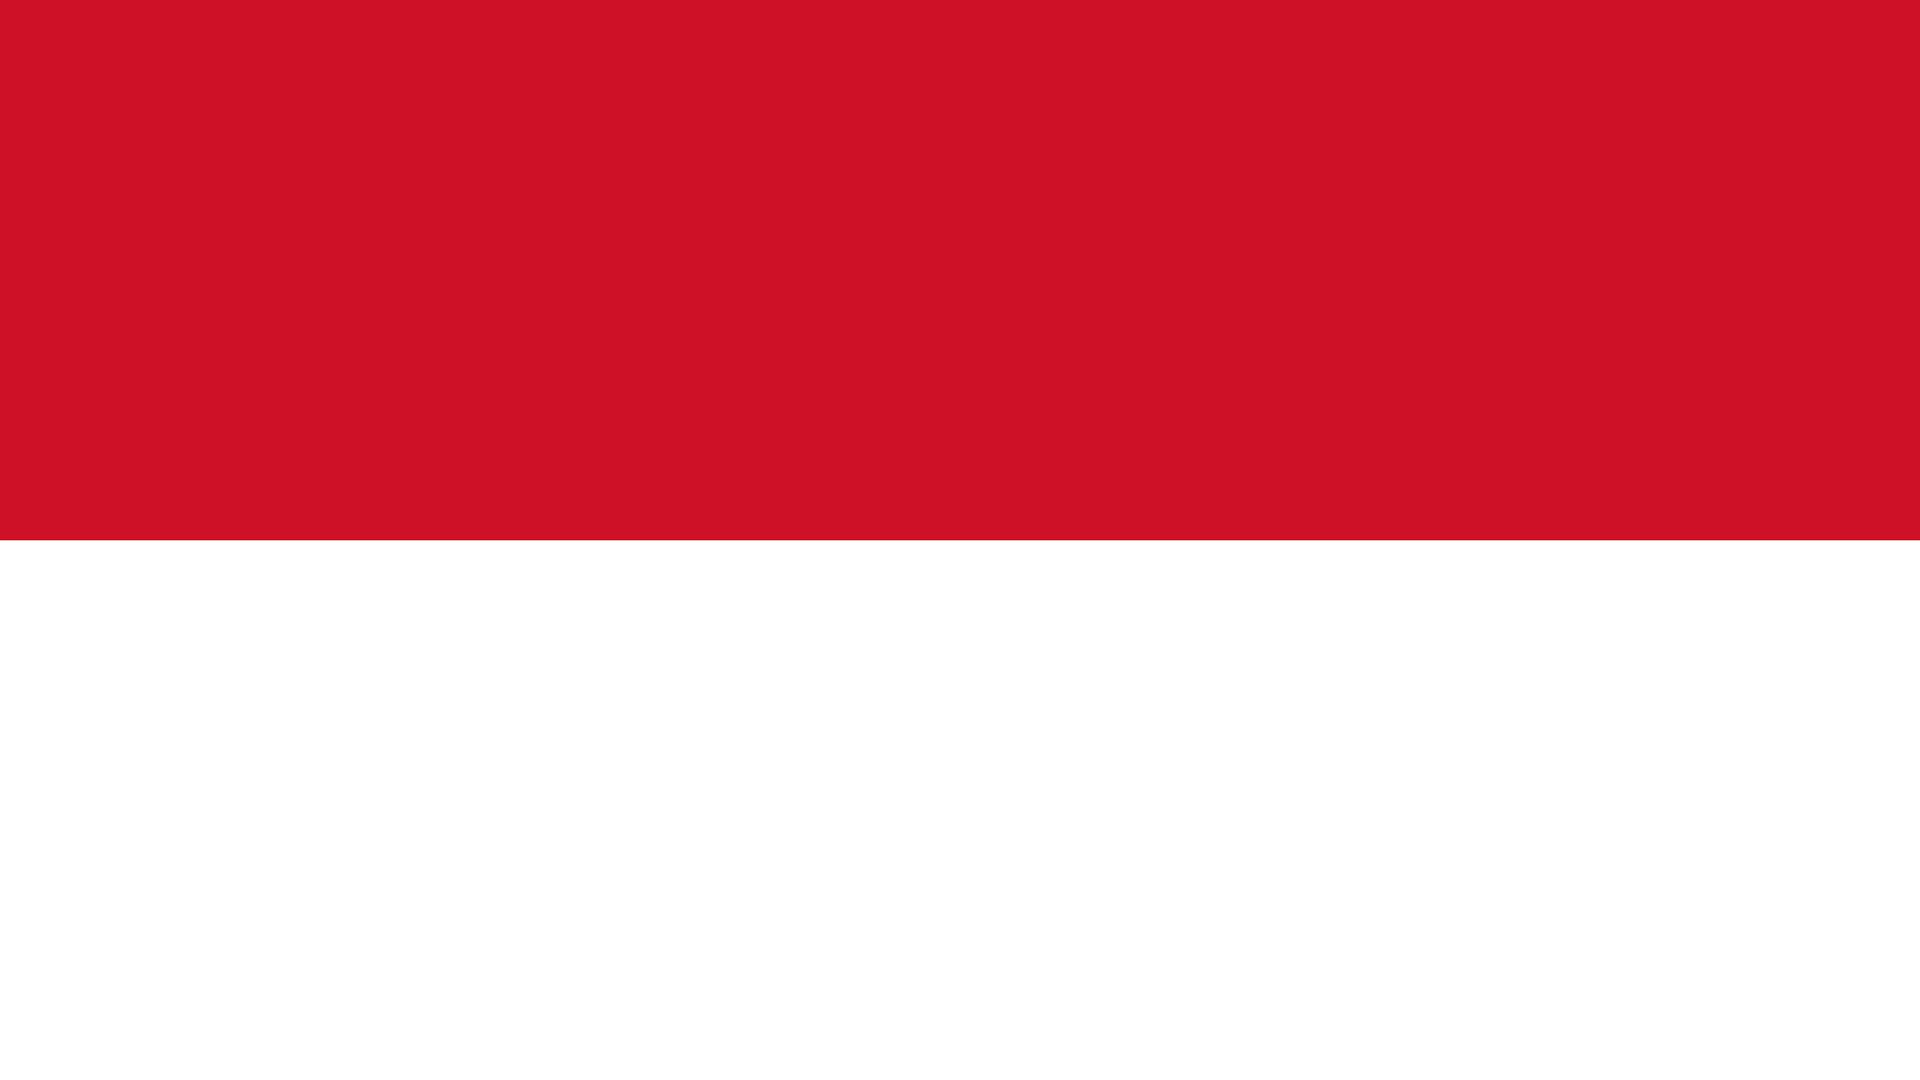 Monaco Flag, High Definition, High Quality, Widescreen